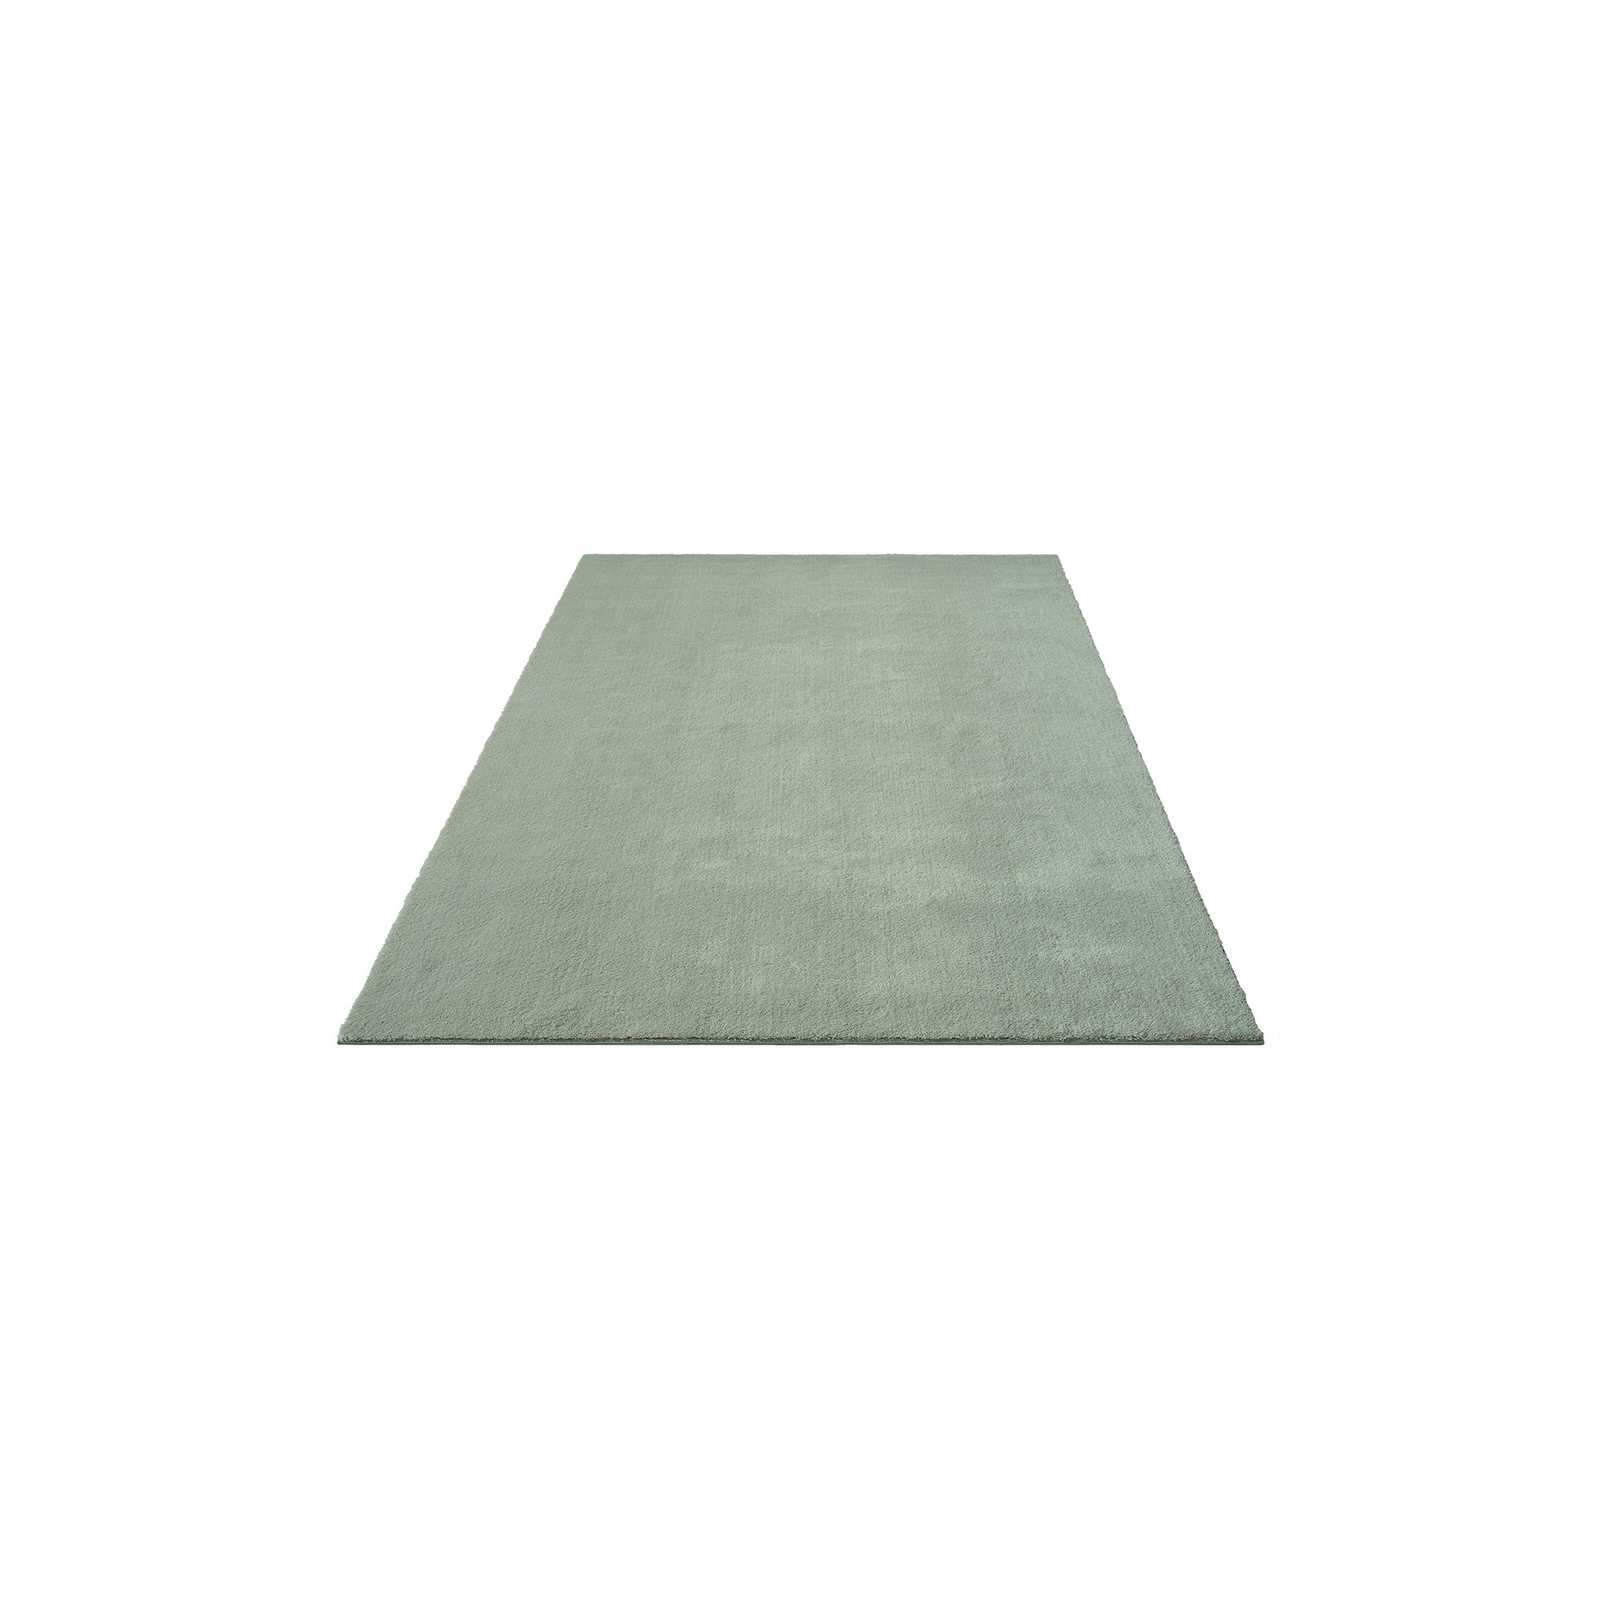 Soft pile carpet in green - 200 x 140 cm
